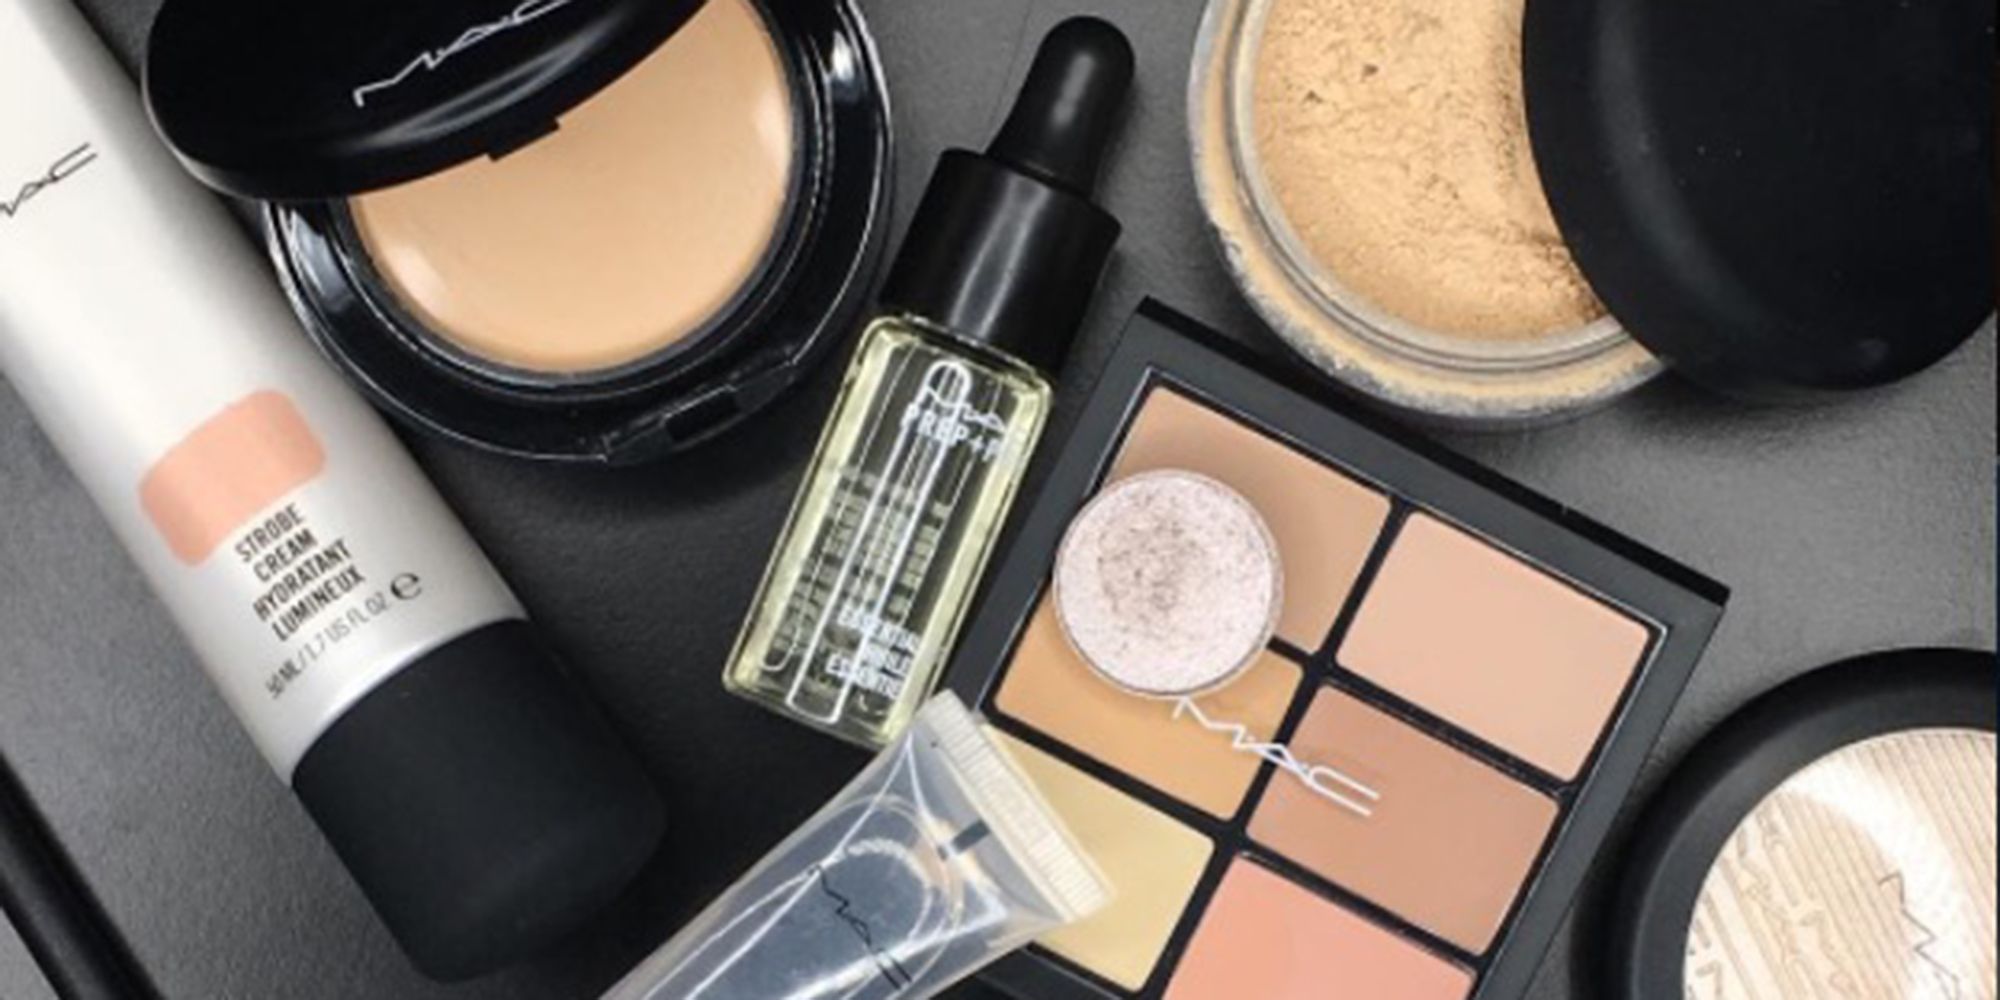 MAC makeup products glowing skin